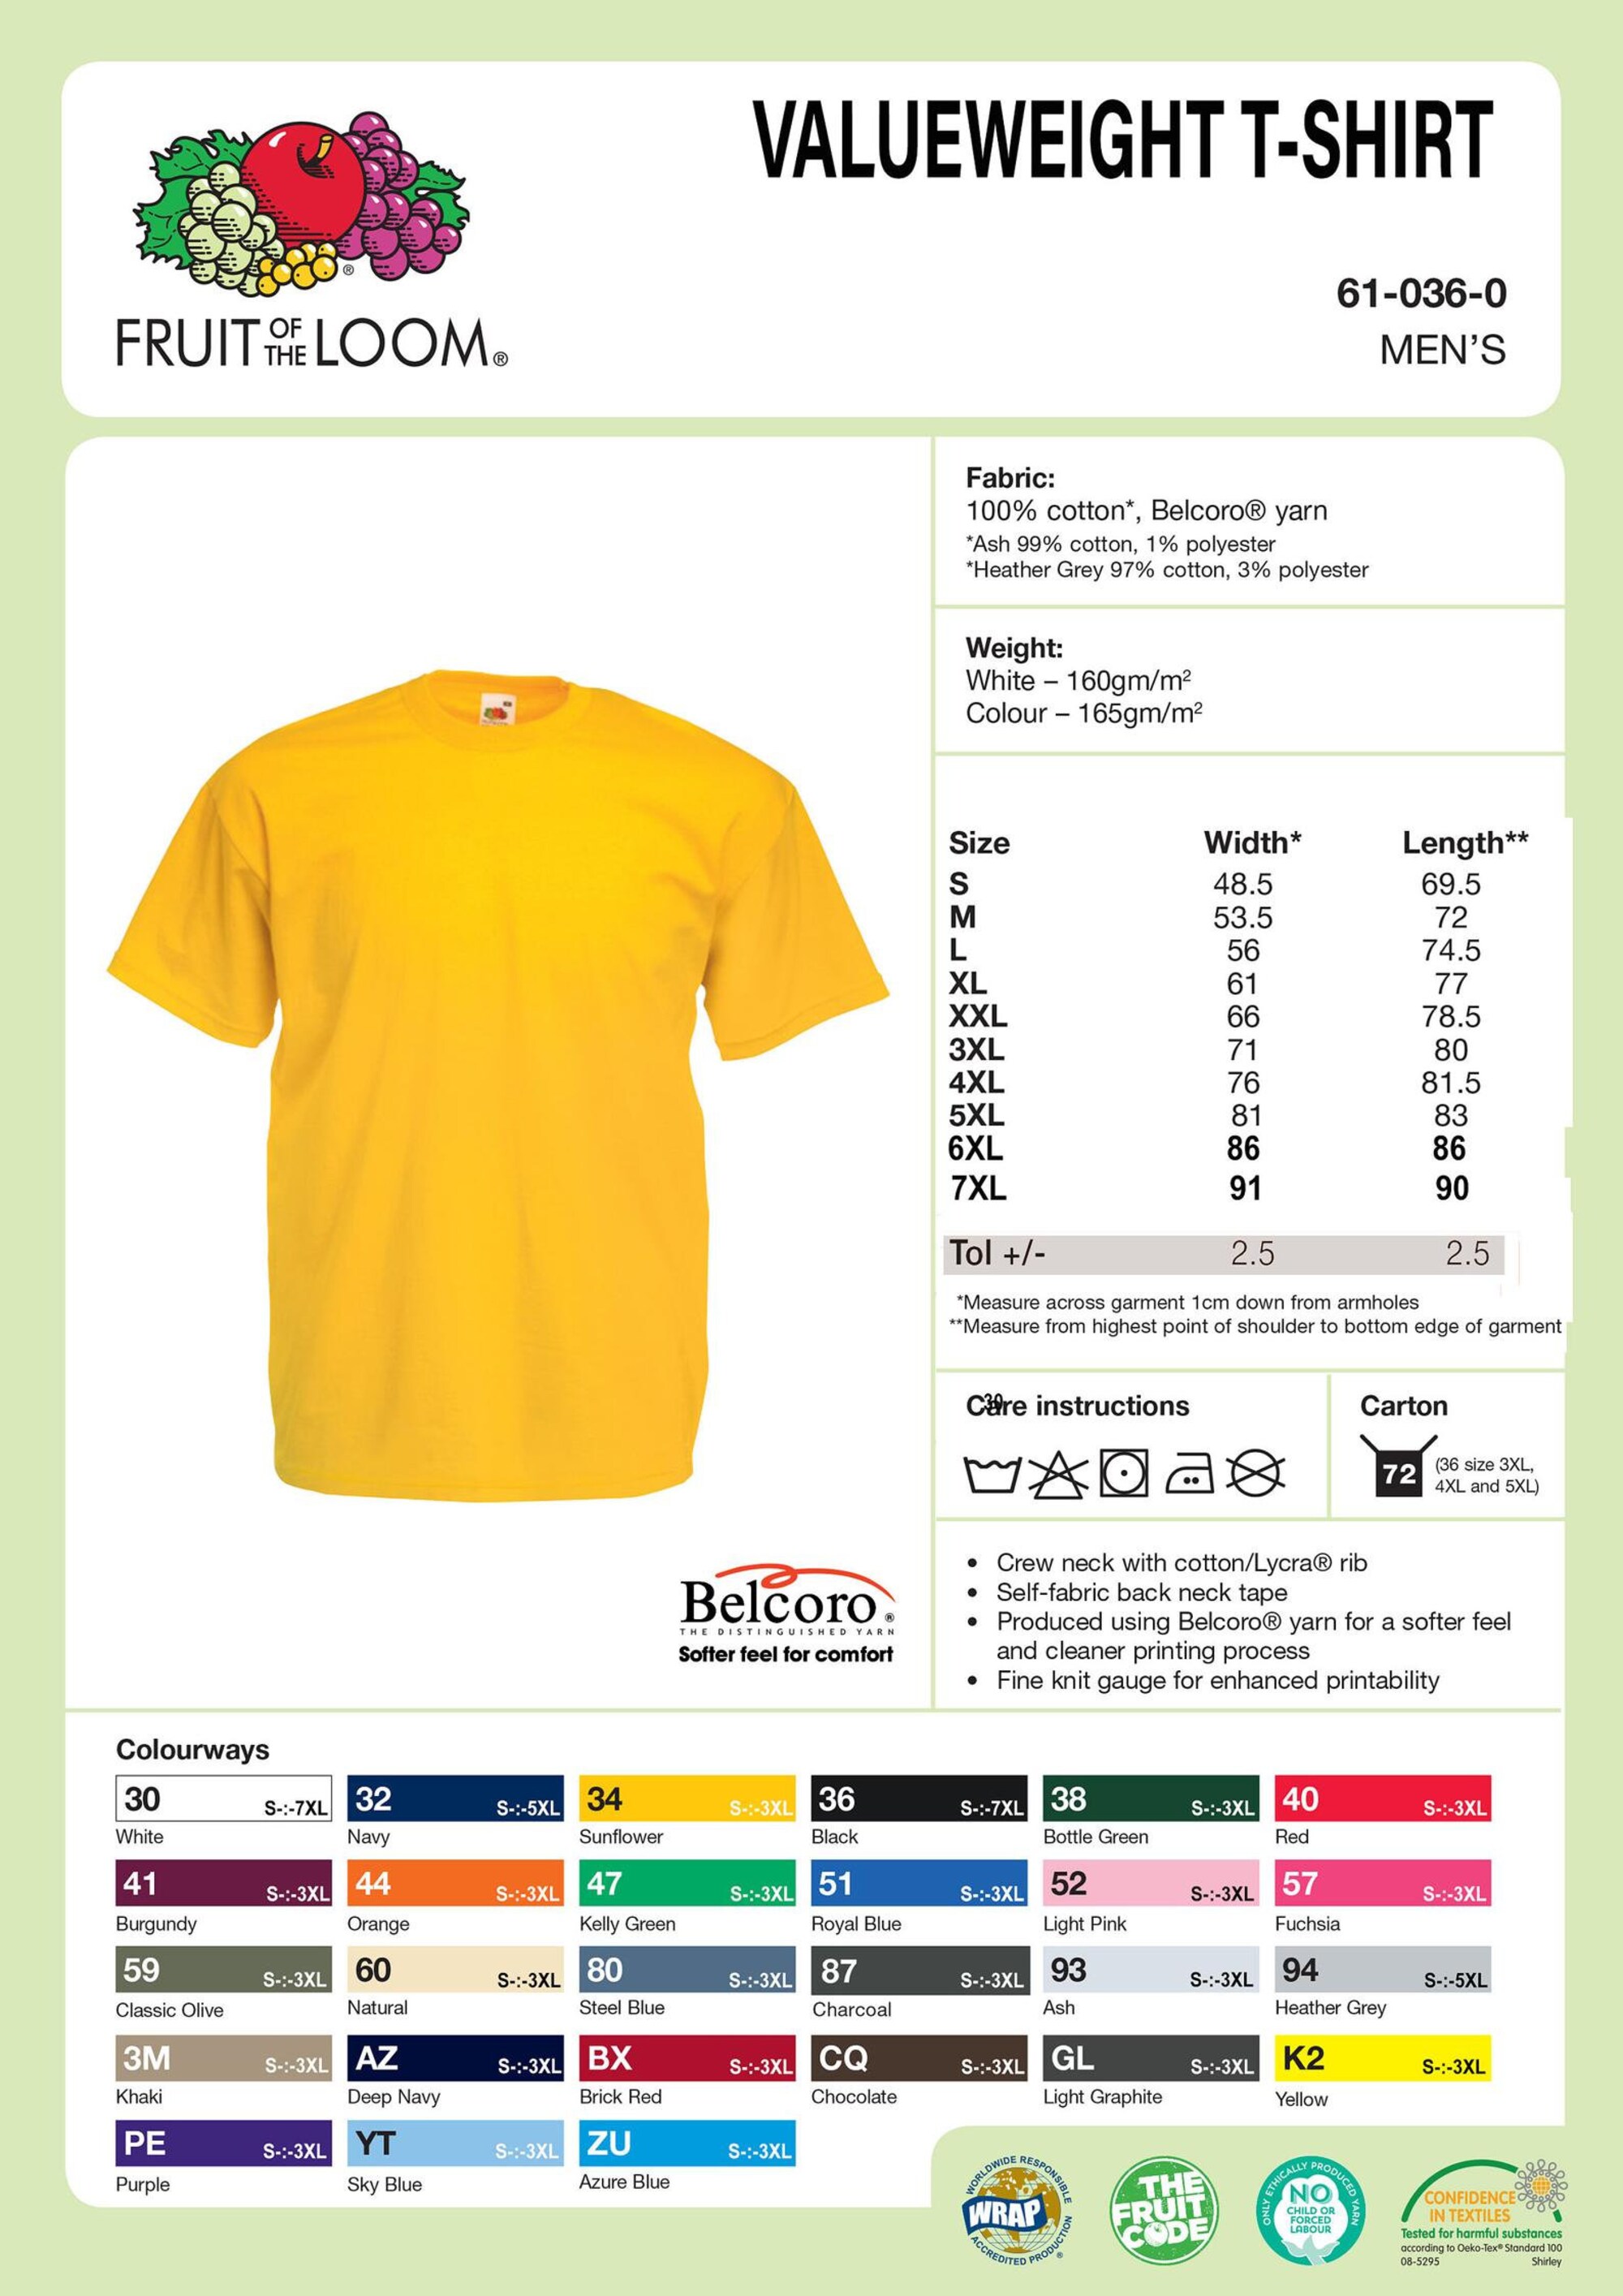 SODOM - Agent Orange t-shirt